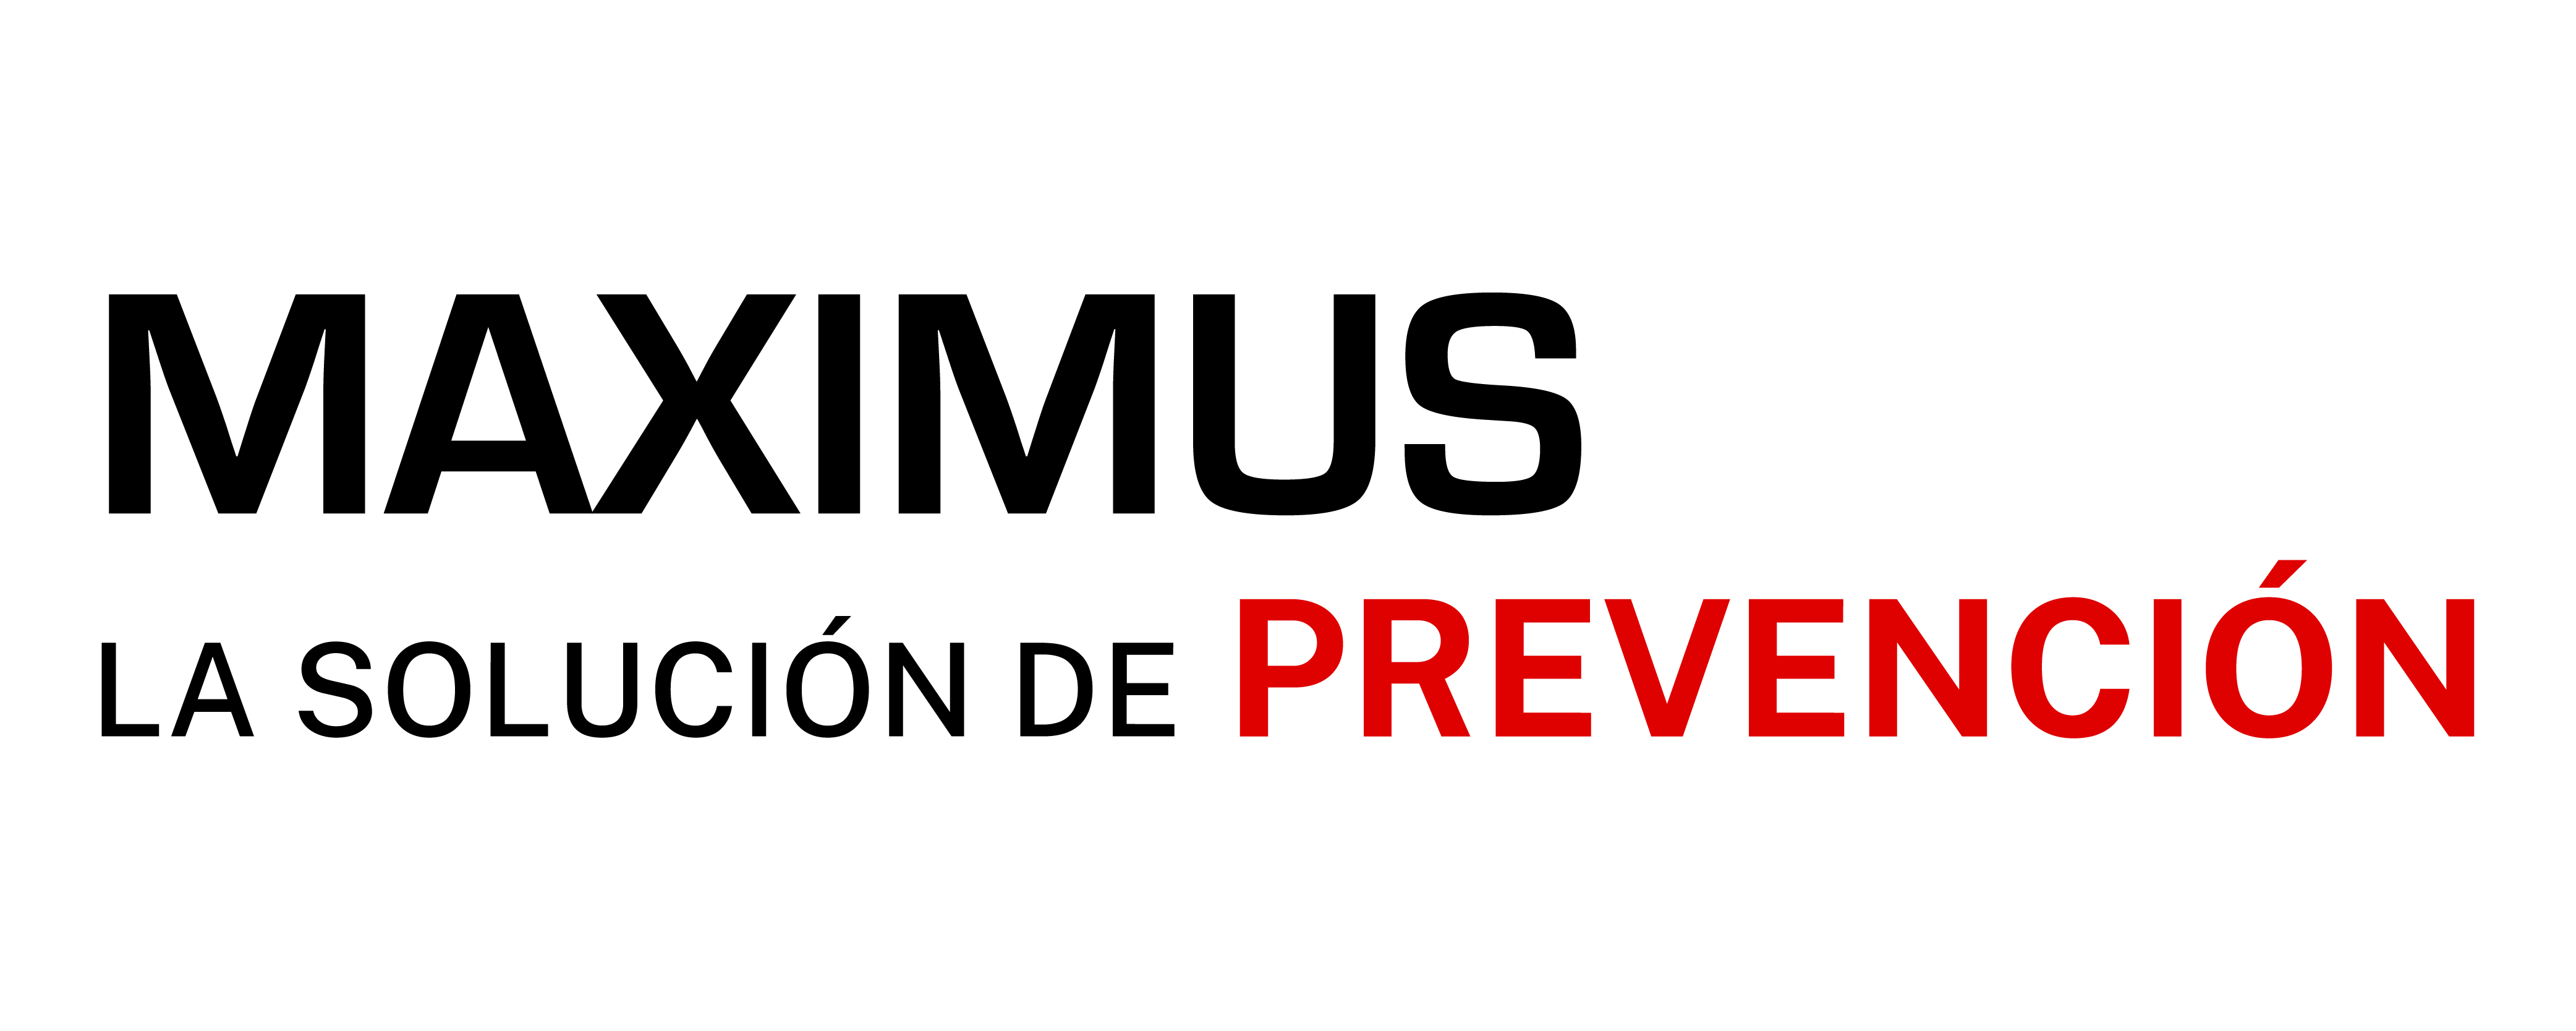 prevention_maximus-the-prevention-solution-es